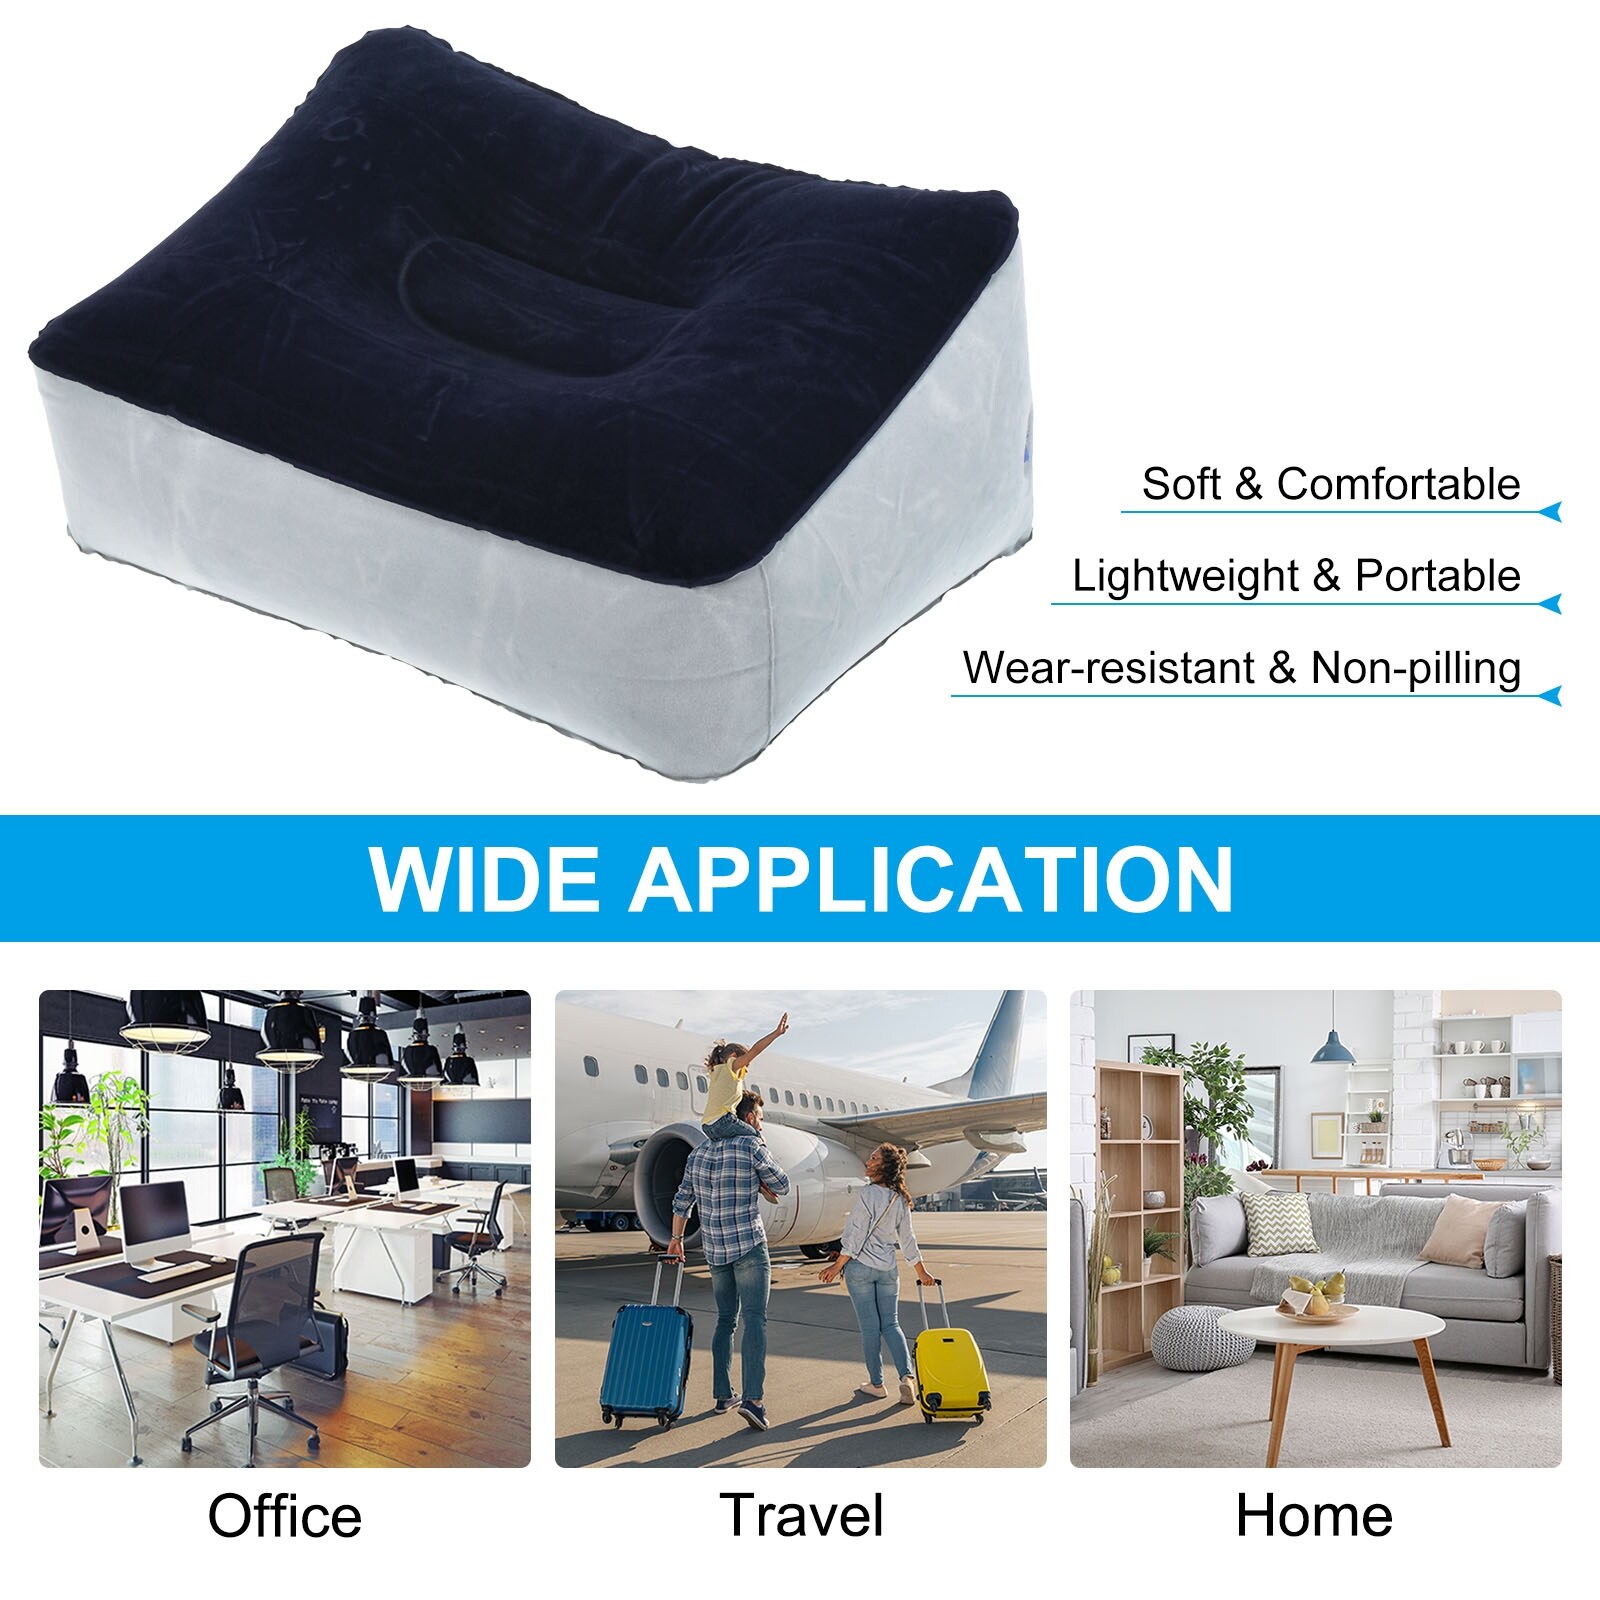 https://ak1.ostkcdn.com/images/products/is/images/direct/0a62edf4412d2536b49c3ffd56148749ab493018/2pcs-Travel-Foot-Rest-Pillow-Inflatable-Foot-Rest-Mat-Leg-Rest-Pillow%2C-Gray-Blue.jpg